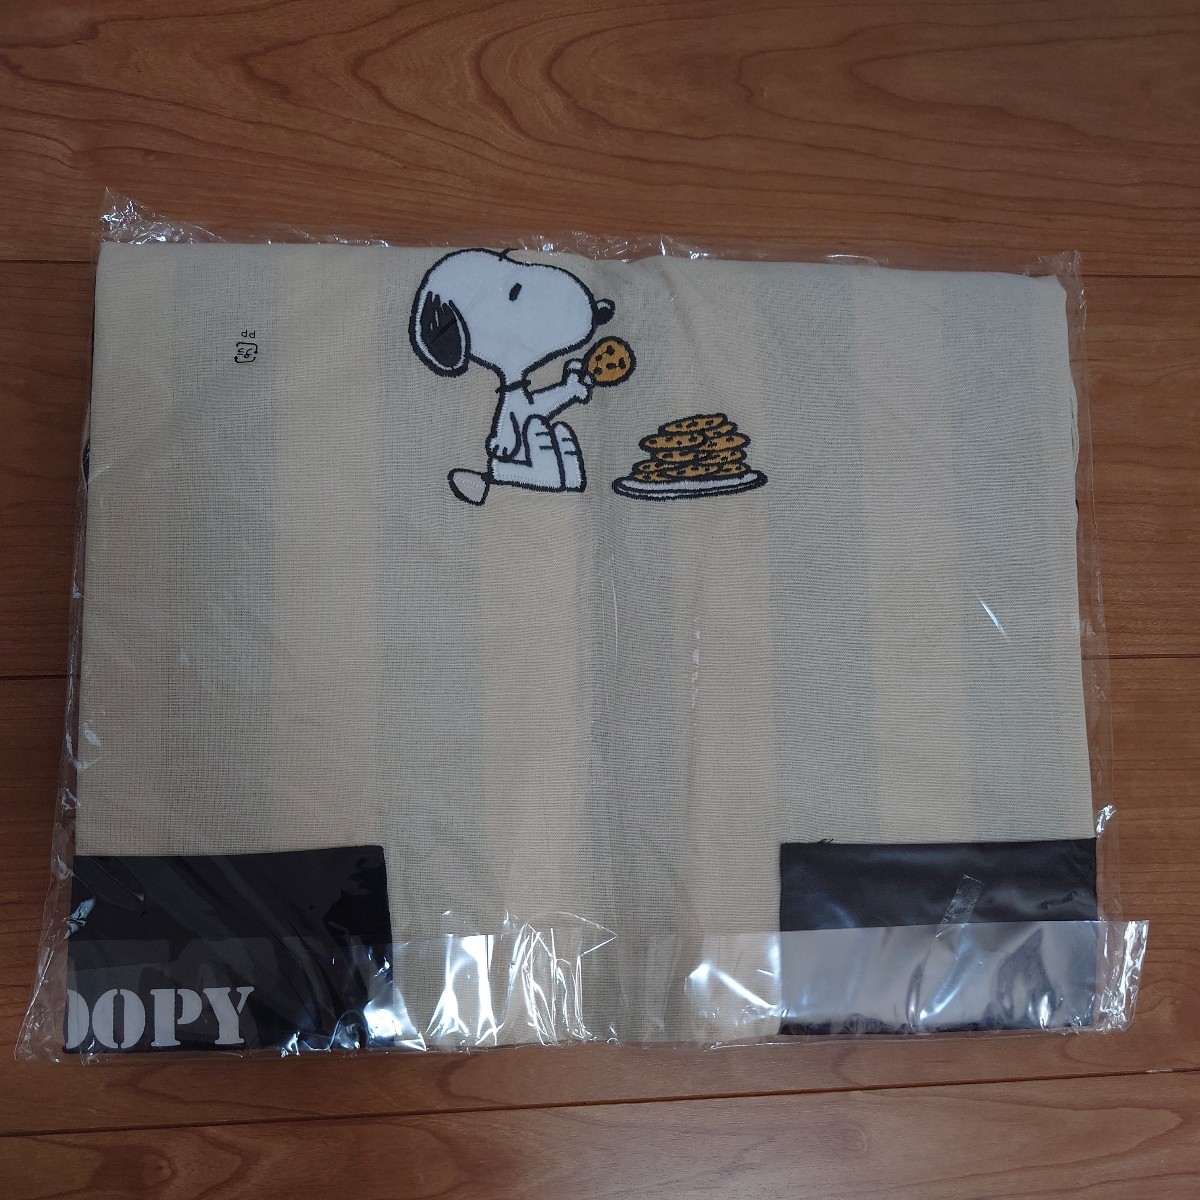  new goods * apron * Snoopy * free size * Monotone stripe *peanuts*SNOOPY* childcare worker * nursing .*. raw * kindergarten 